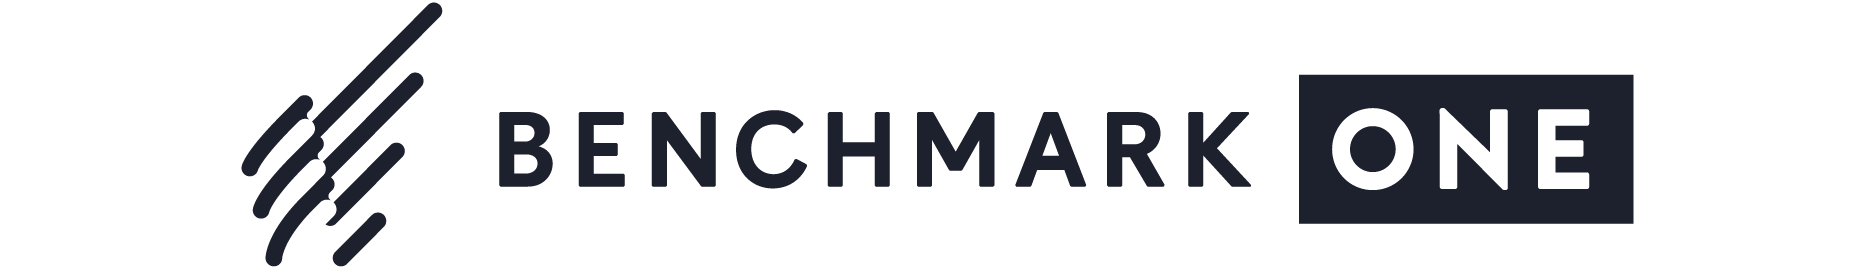 Benchmark one- Customer relationship management system